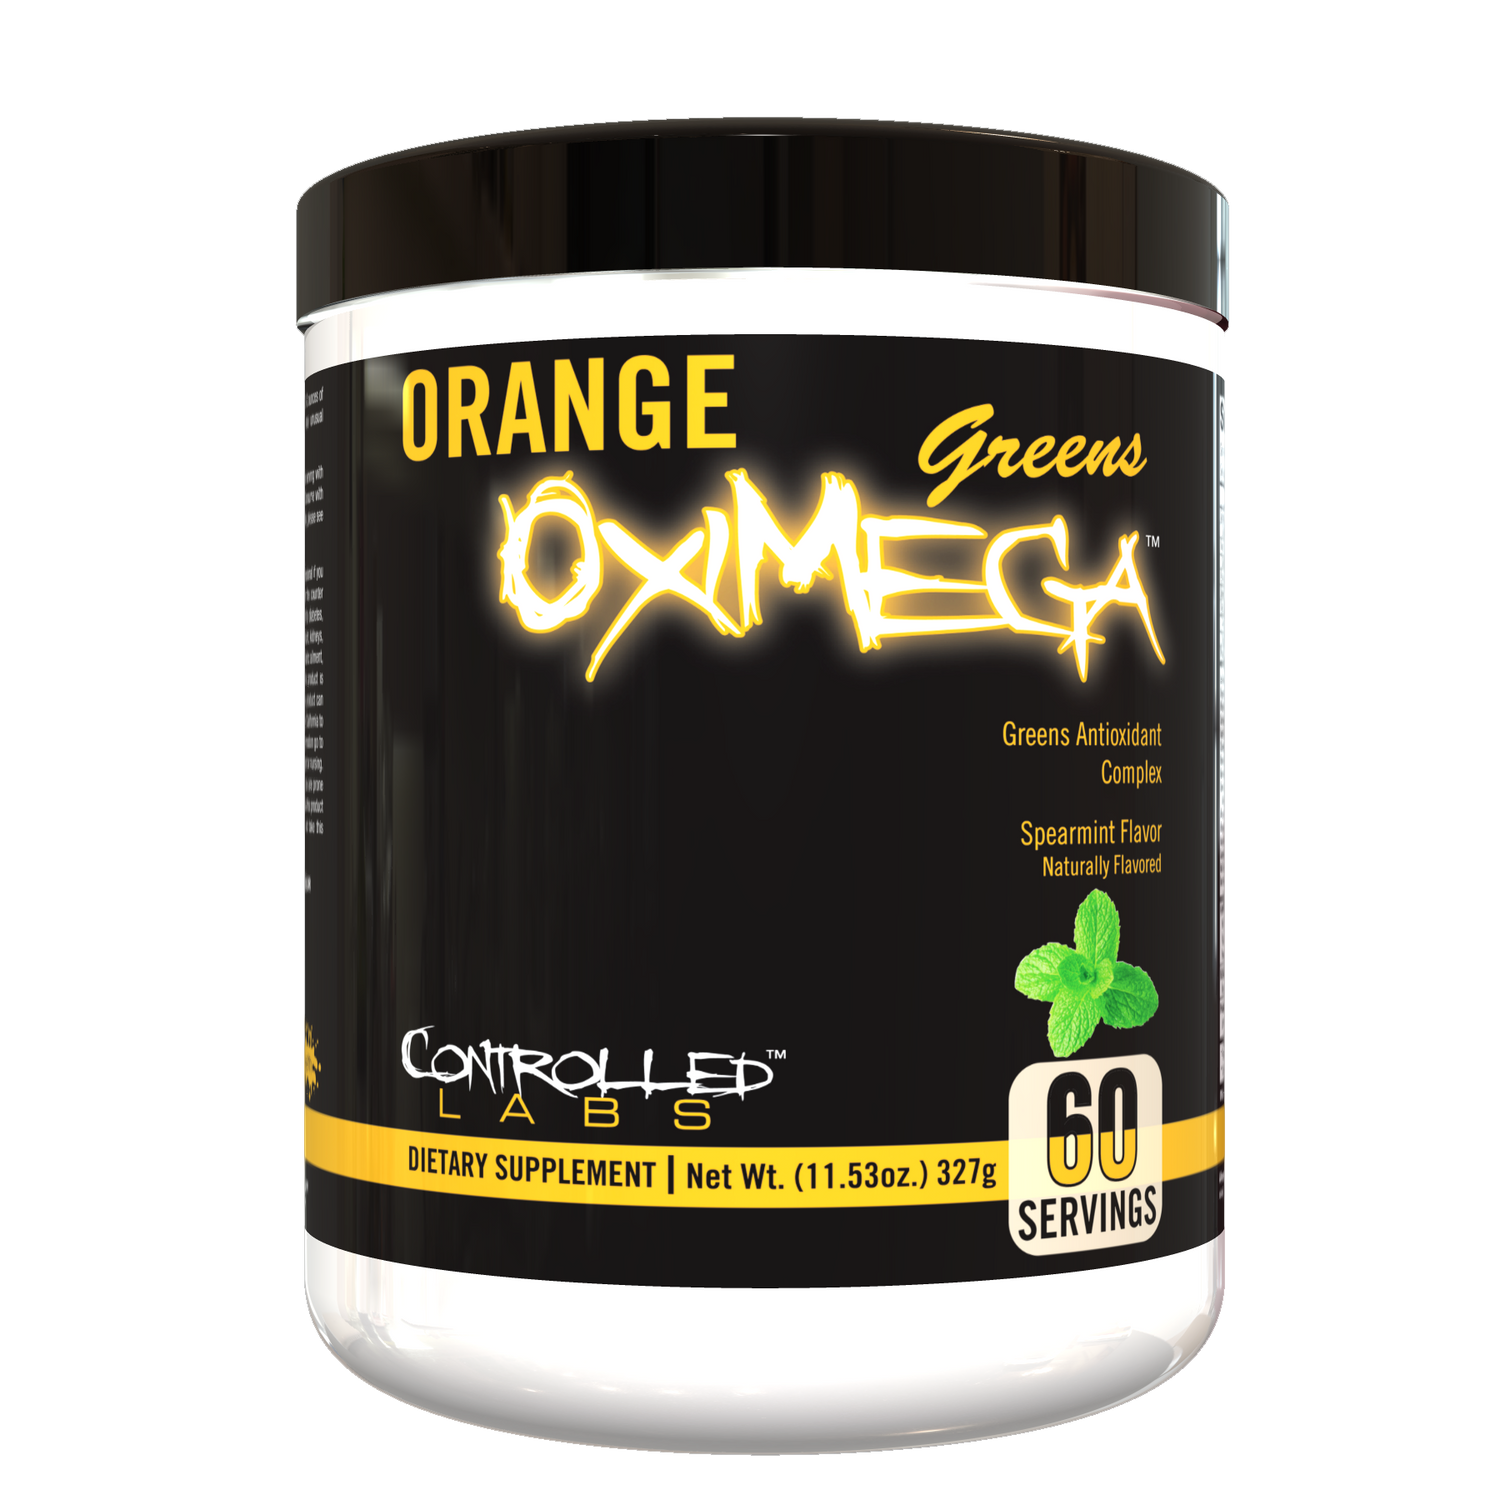 orange oximega greens 60 rendering